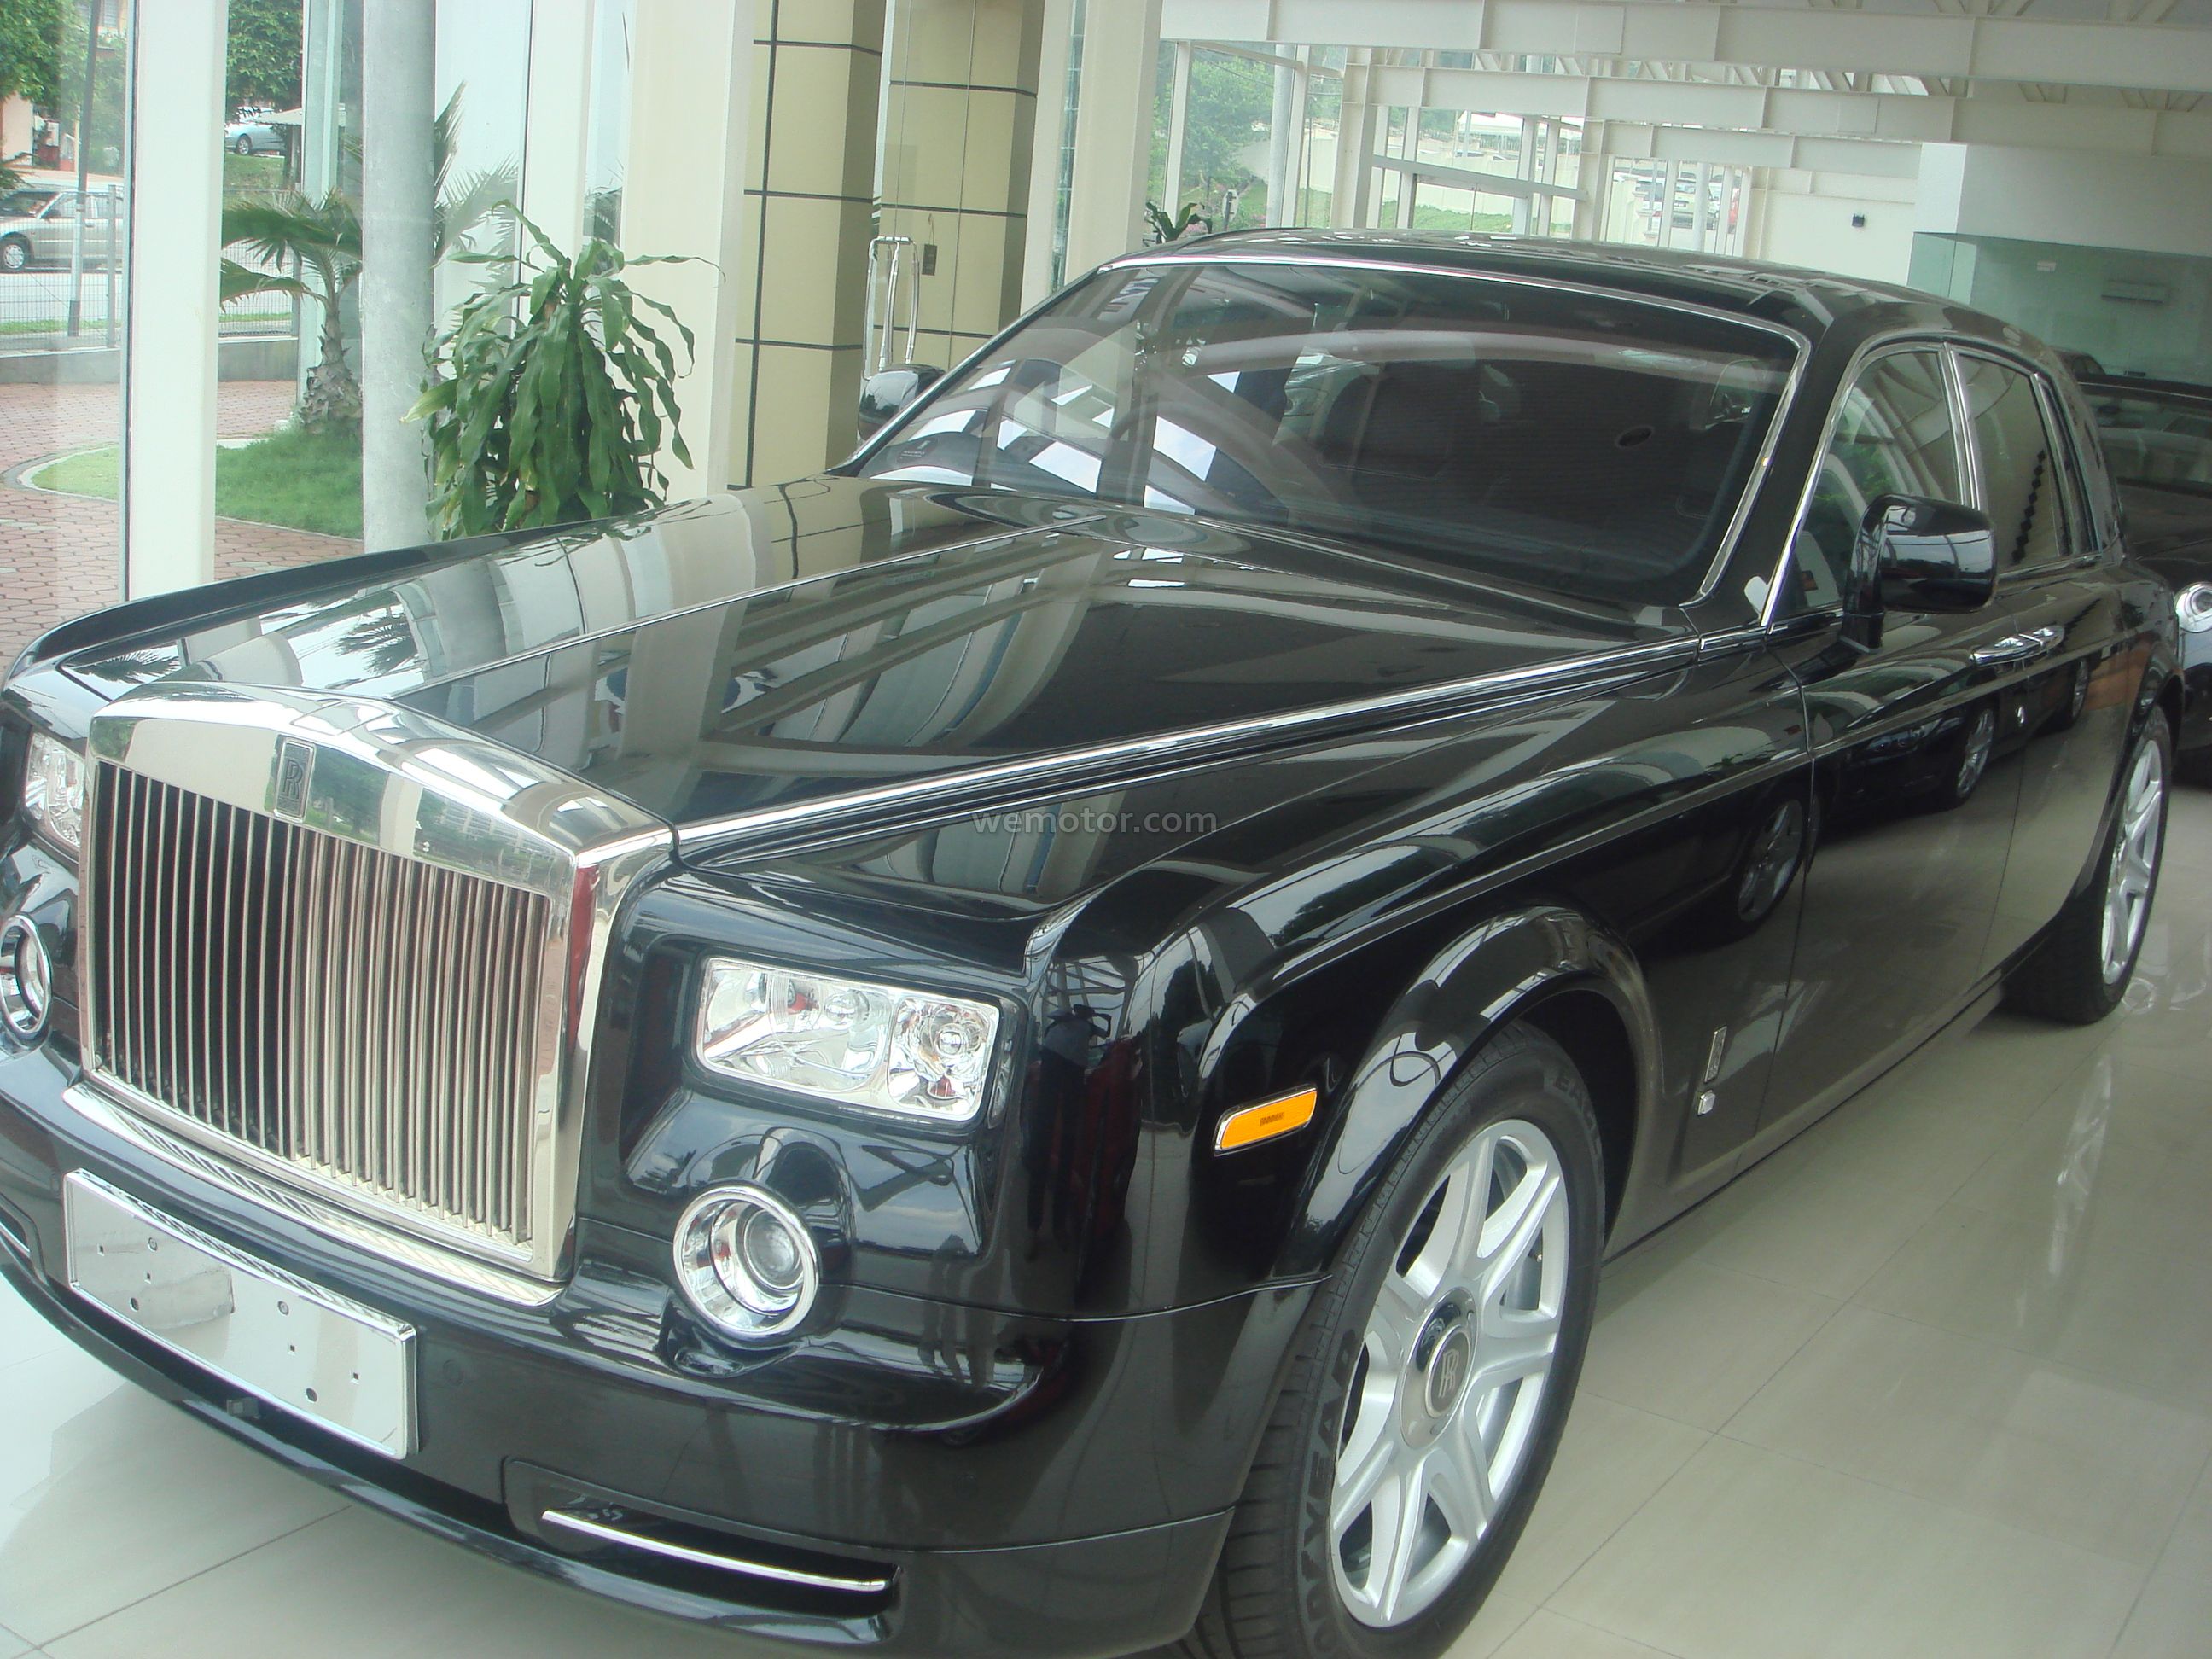 Rolls Royce 20HP sedan